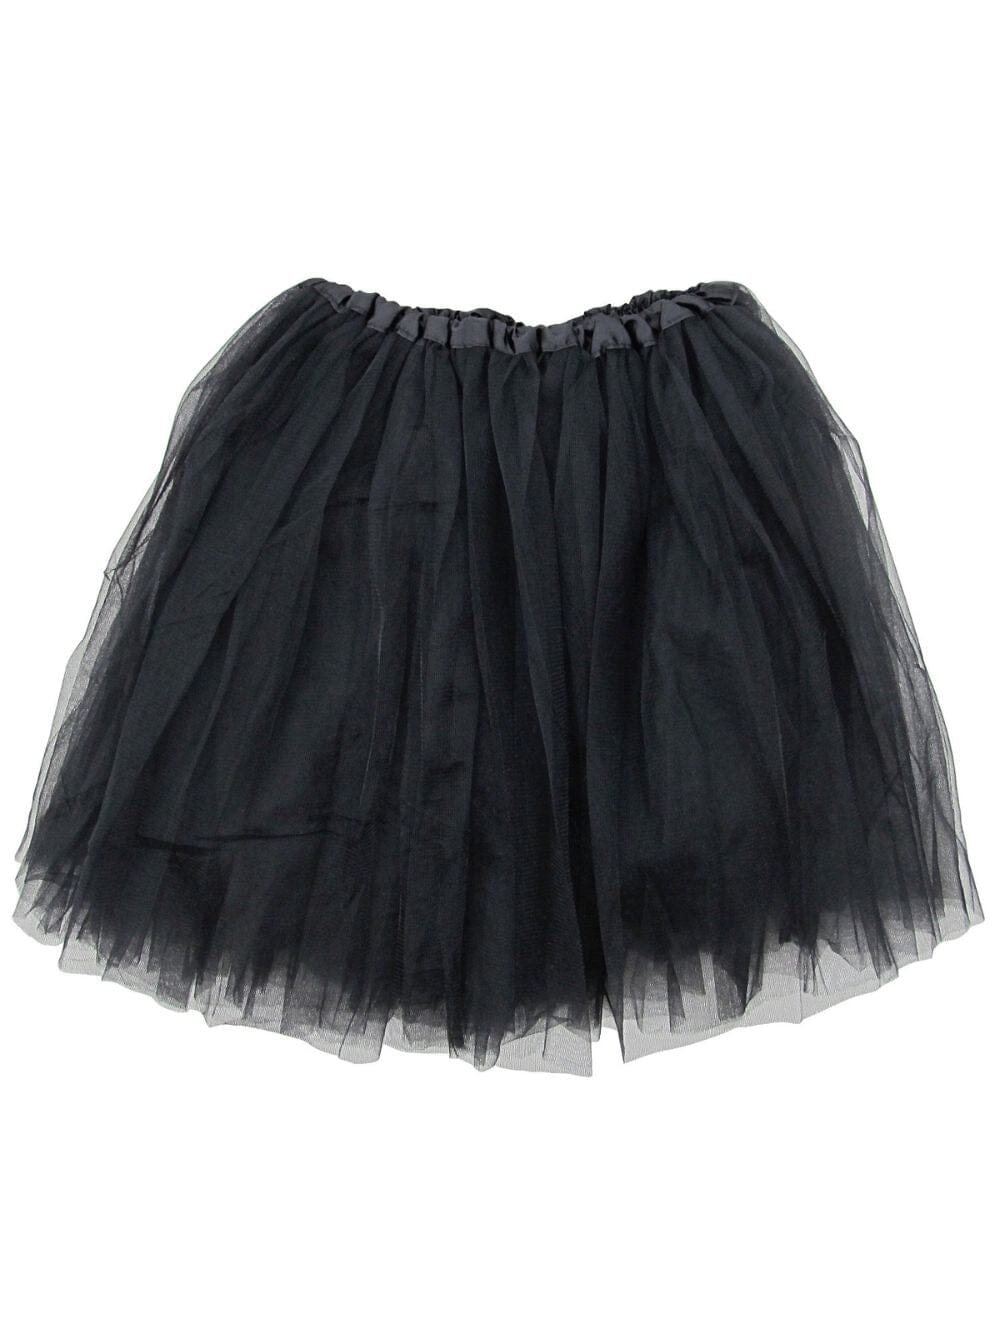 Black Plus Size Adult Tutu Skirt - Women's Plus Size 3- Layer Basic Ballet Costume Dance Tutus - Sydney So Sweet